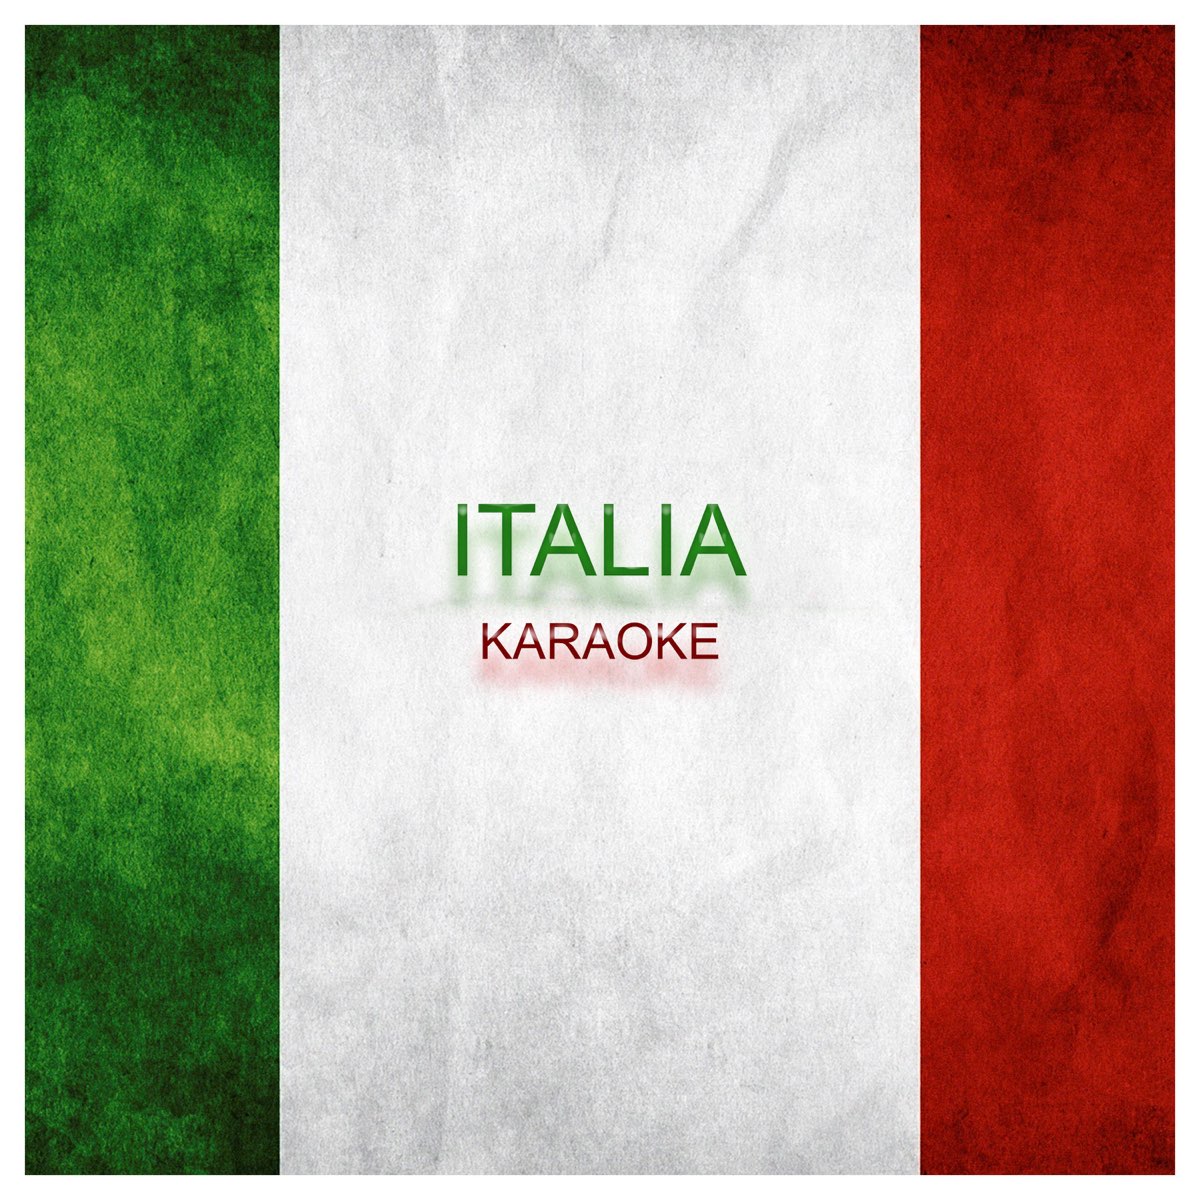 Italia Karaoke - Single by AJ Adam Jacobs on Apple Music